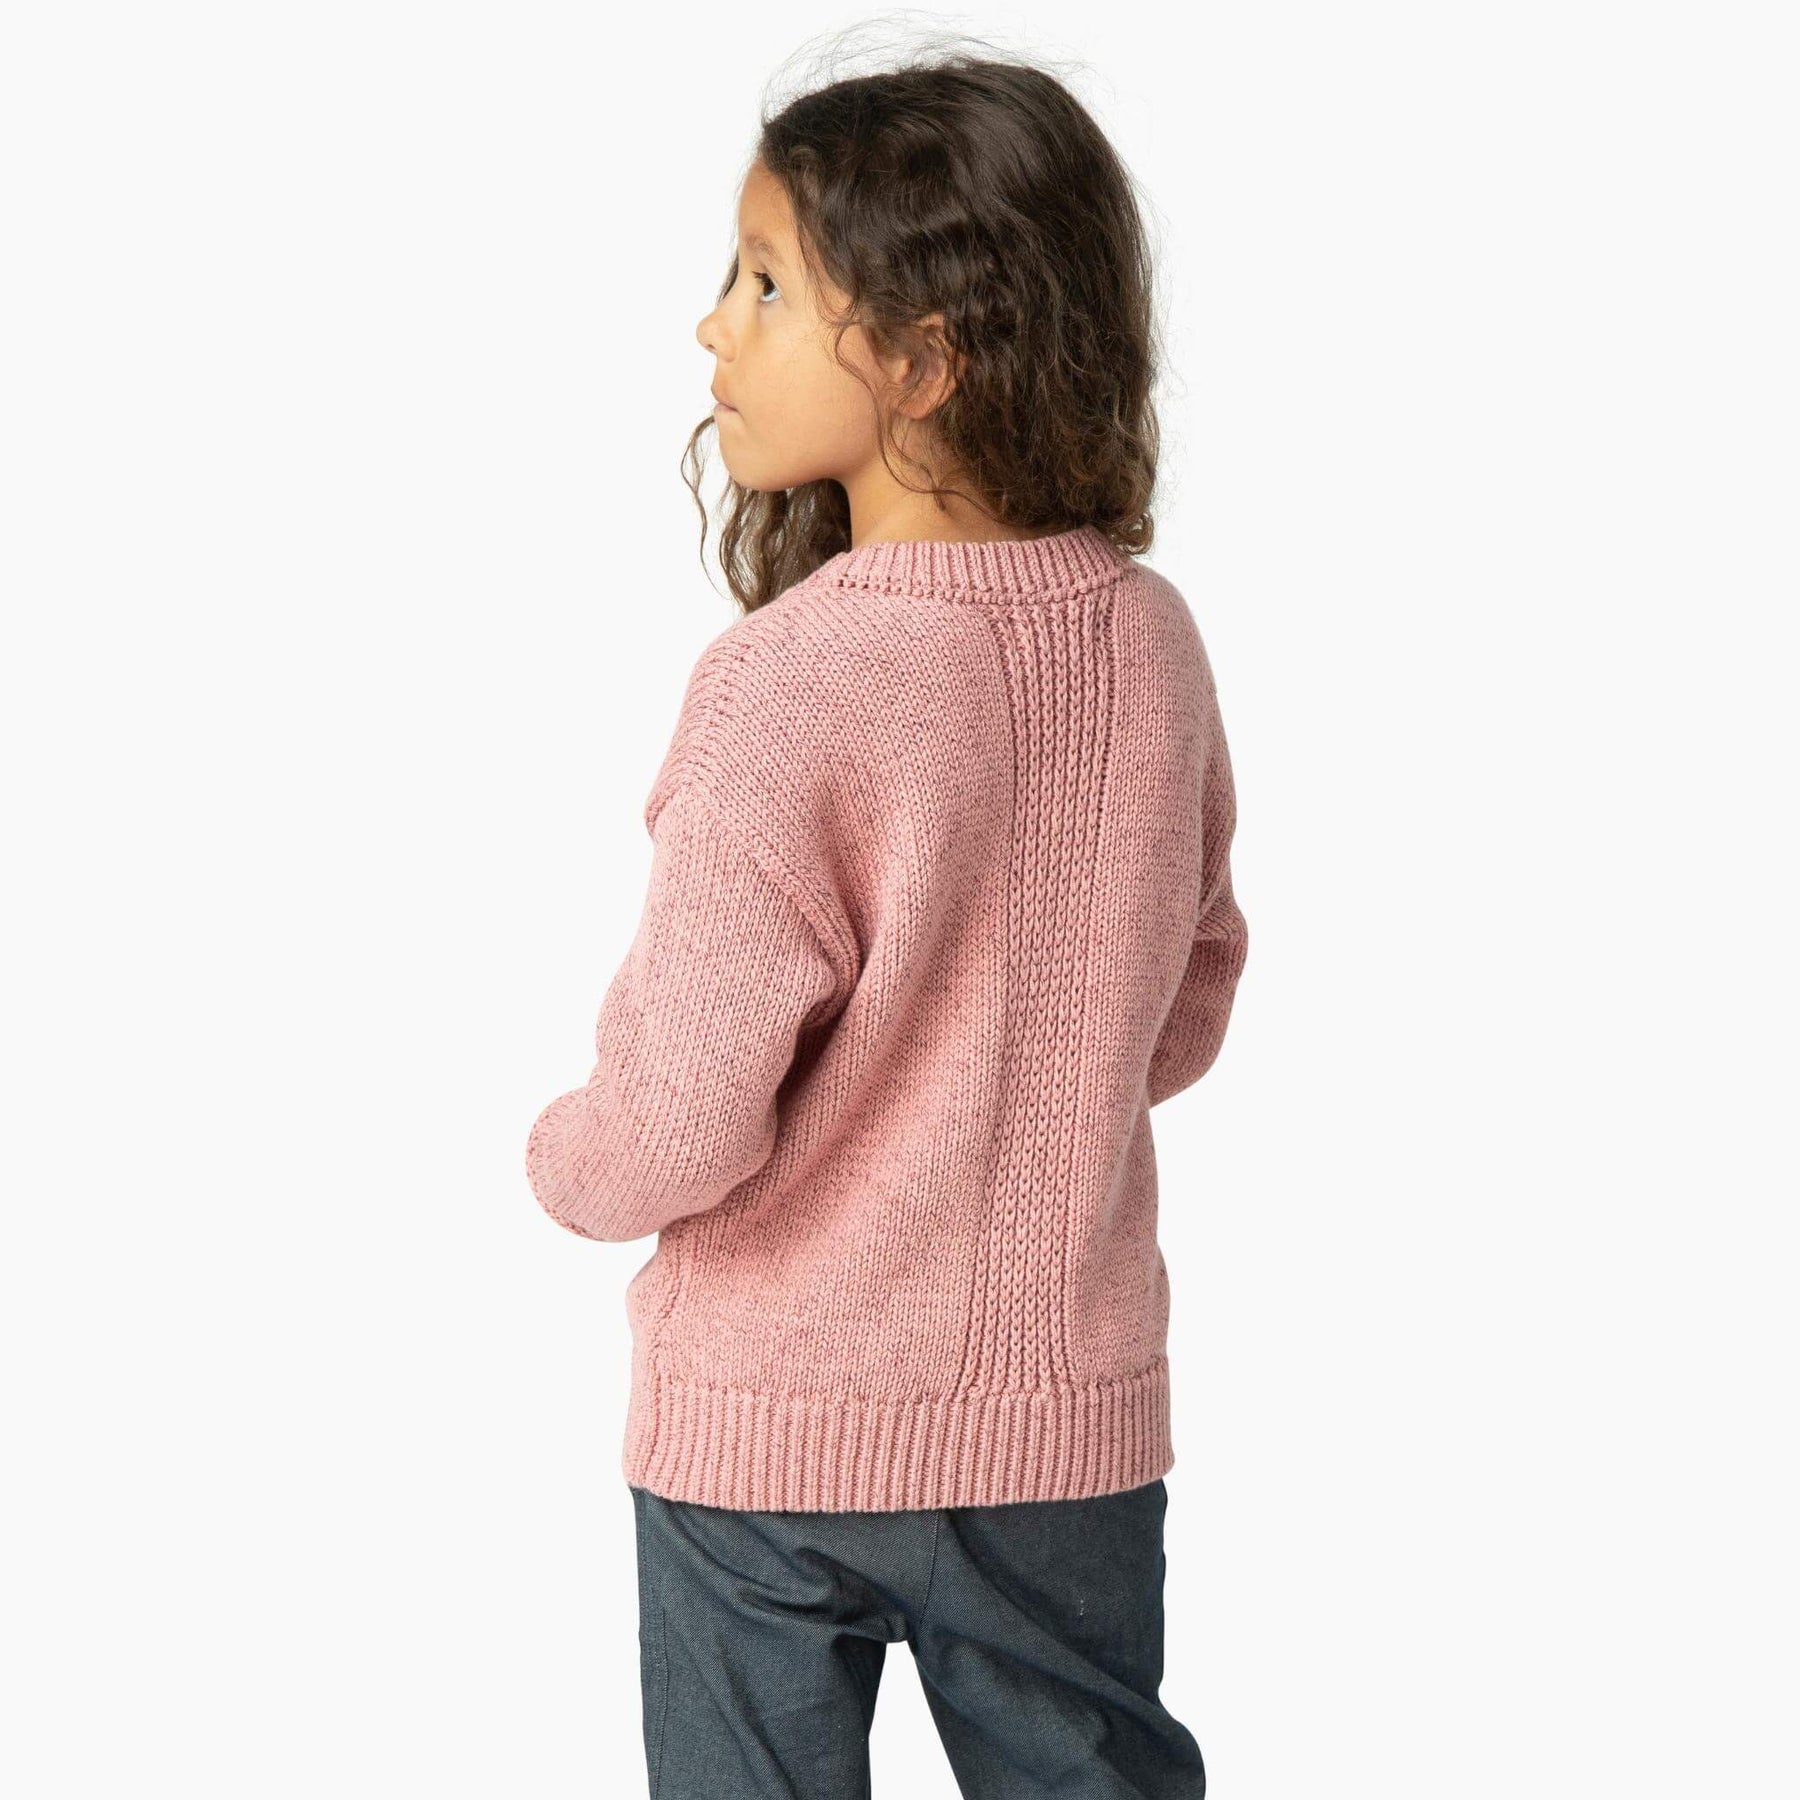 Marshmallow cotton jersey knit fabric family fabric – Urbankidsfabric